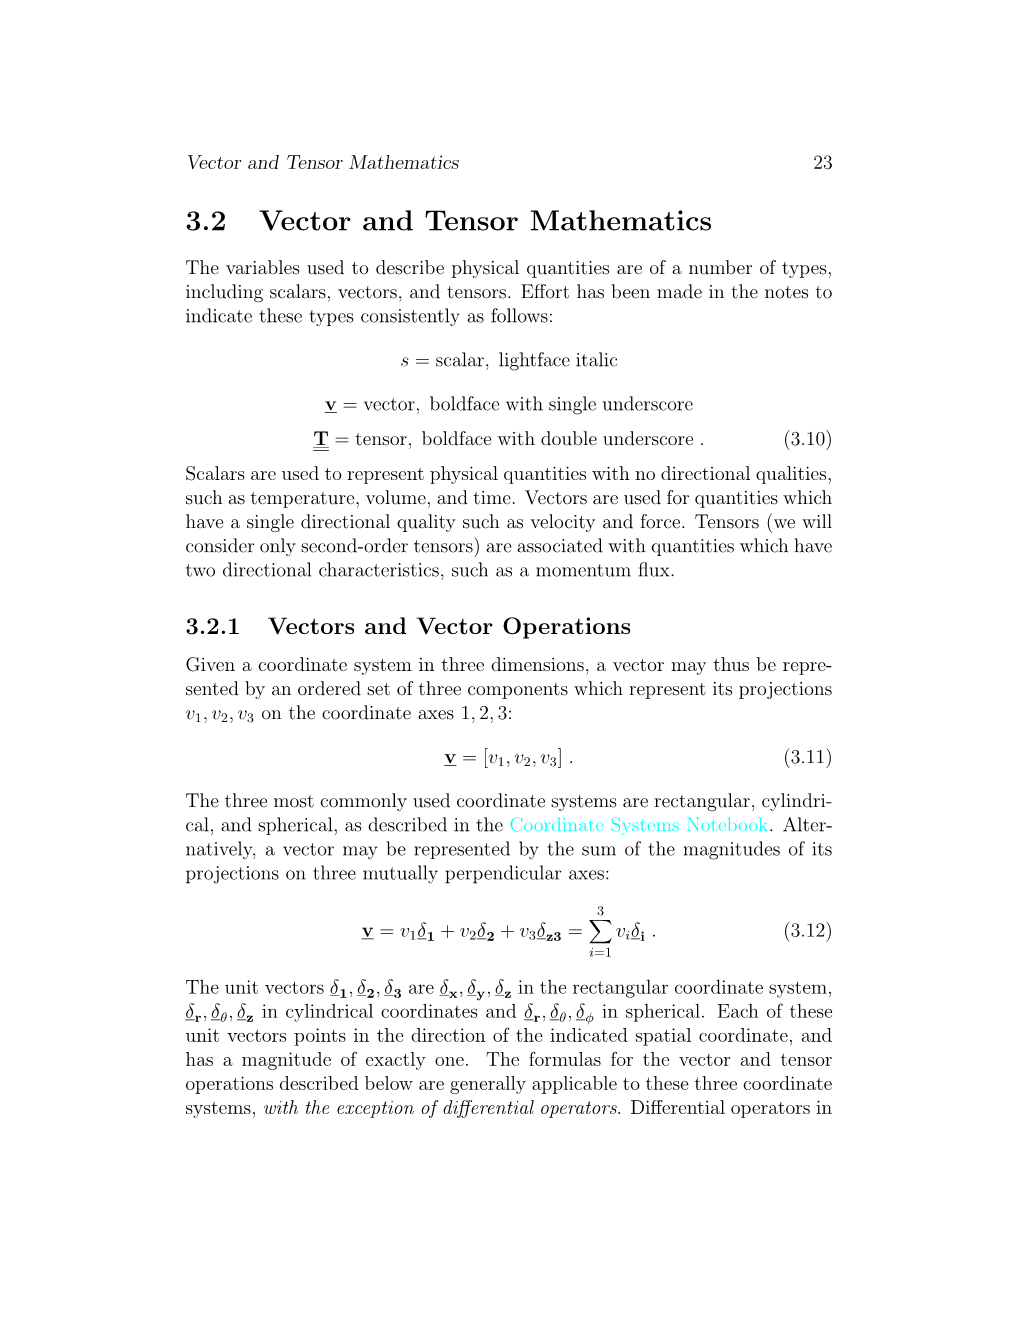 3.2 Vector and Tensor Mathematics